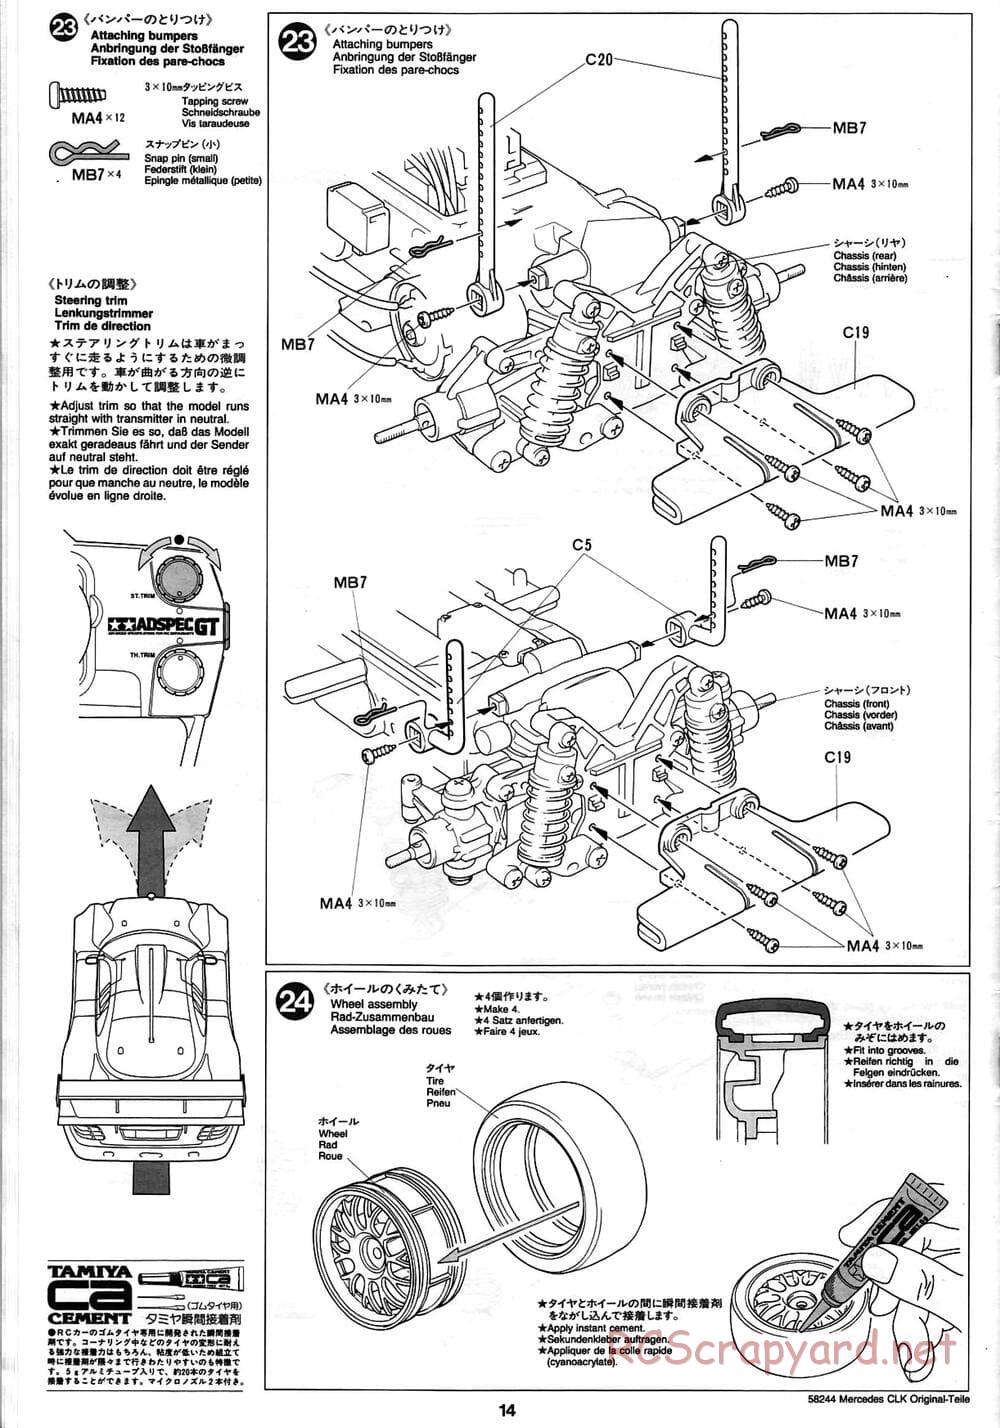 Tamiya - Mercedes CLK-GTR Original-Teile - TL-01 Chassis - Manual - Page 14